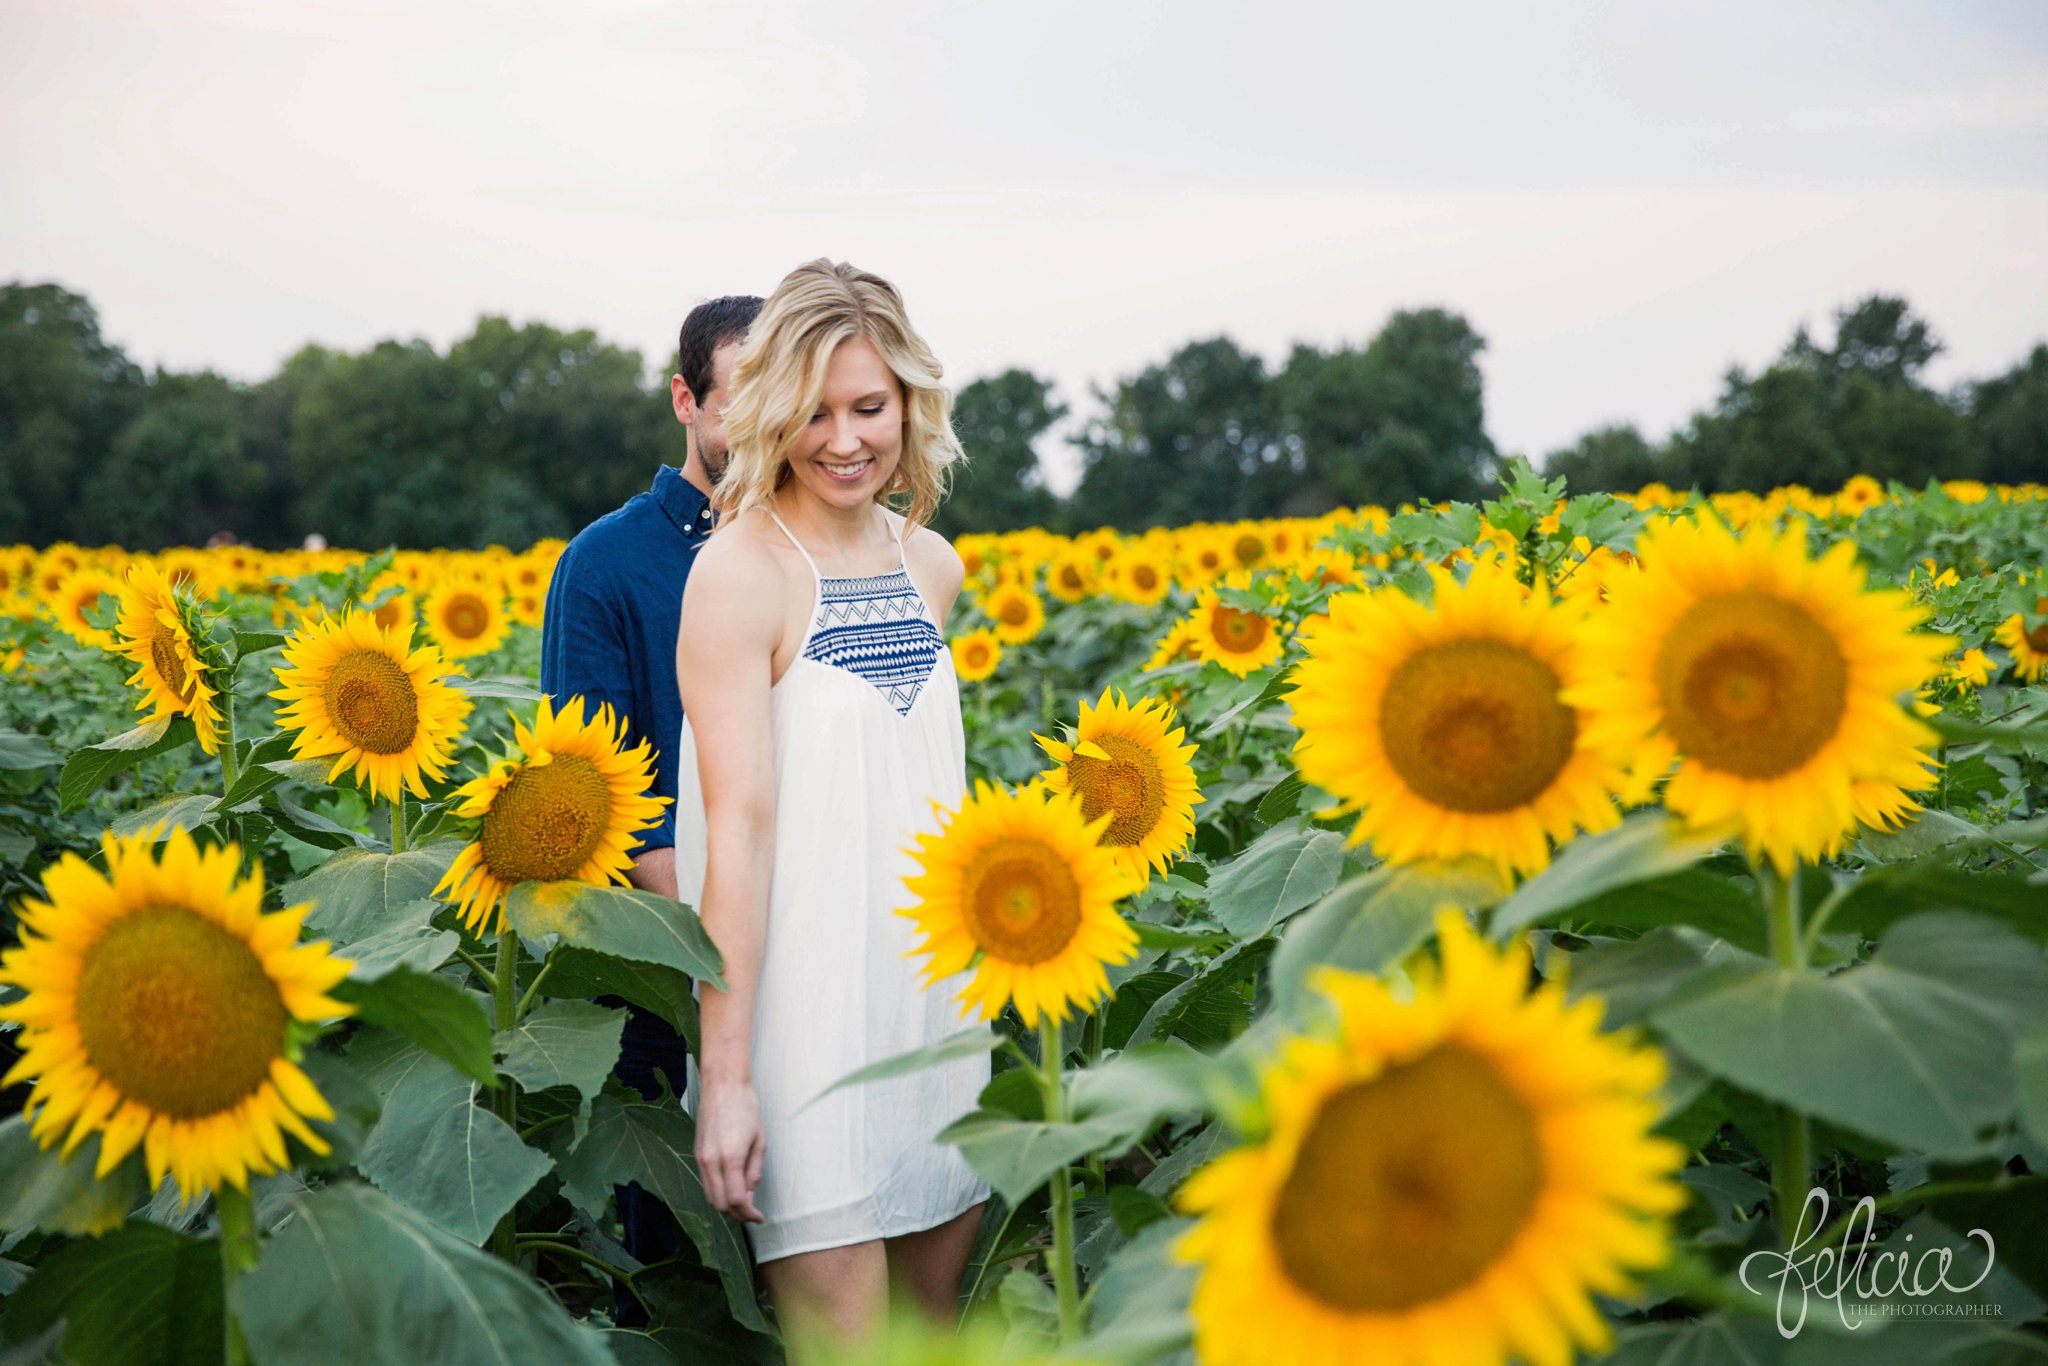 Sunrise Engagement Photos | Felicia The Photographer | Sunflower field | Walking